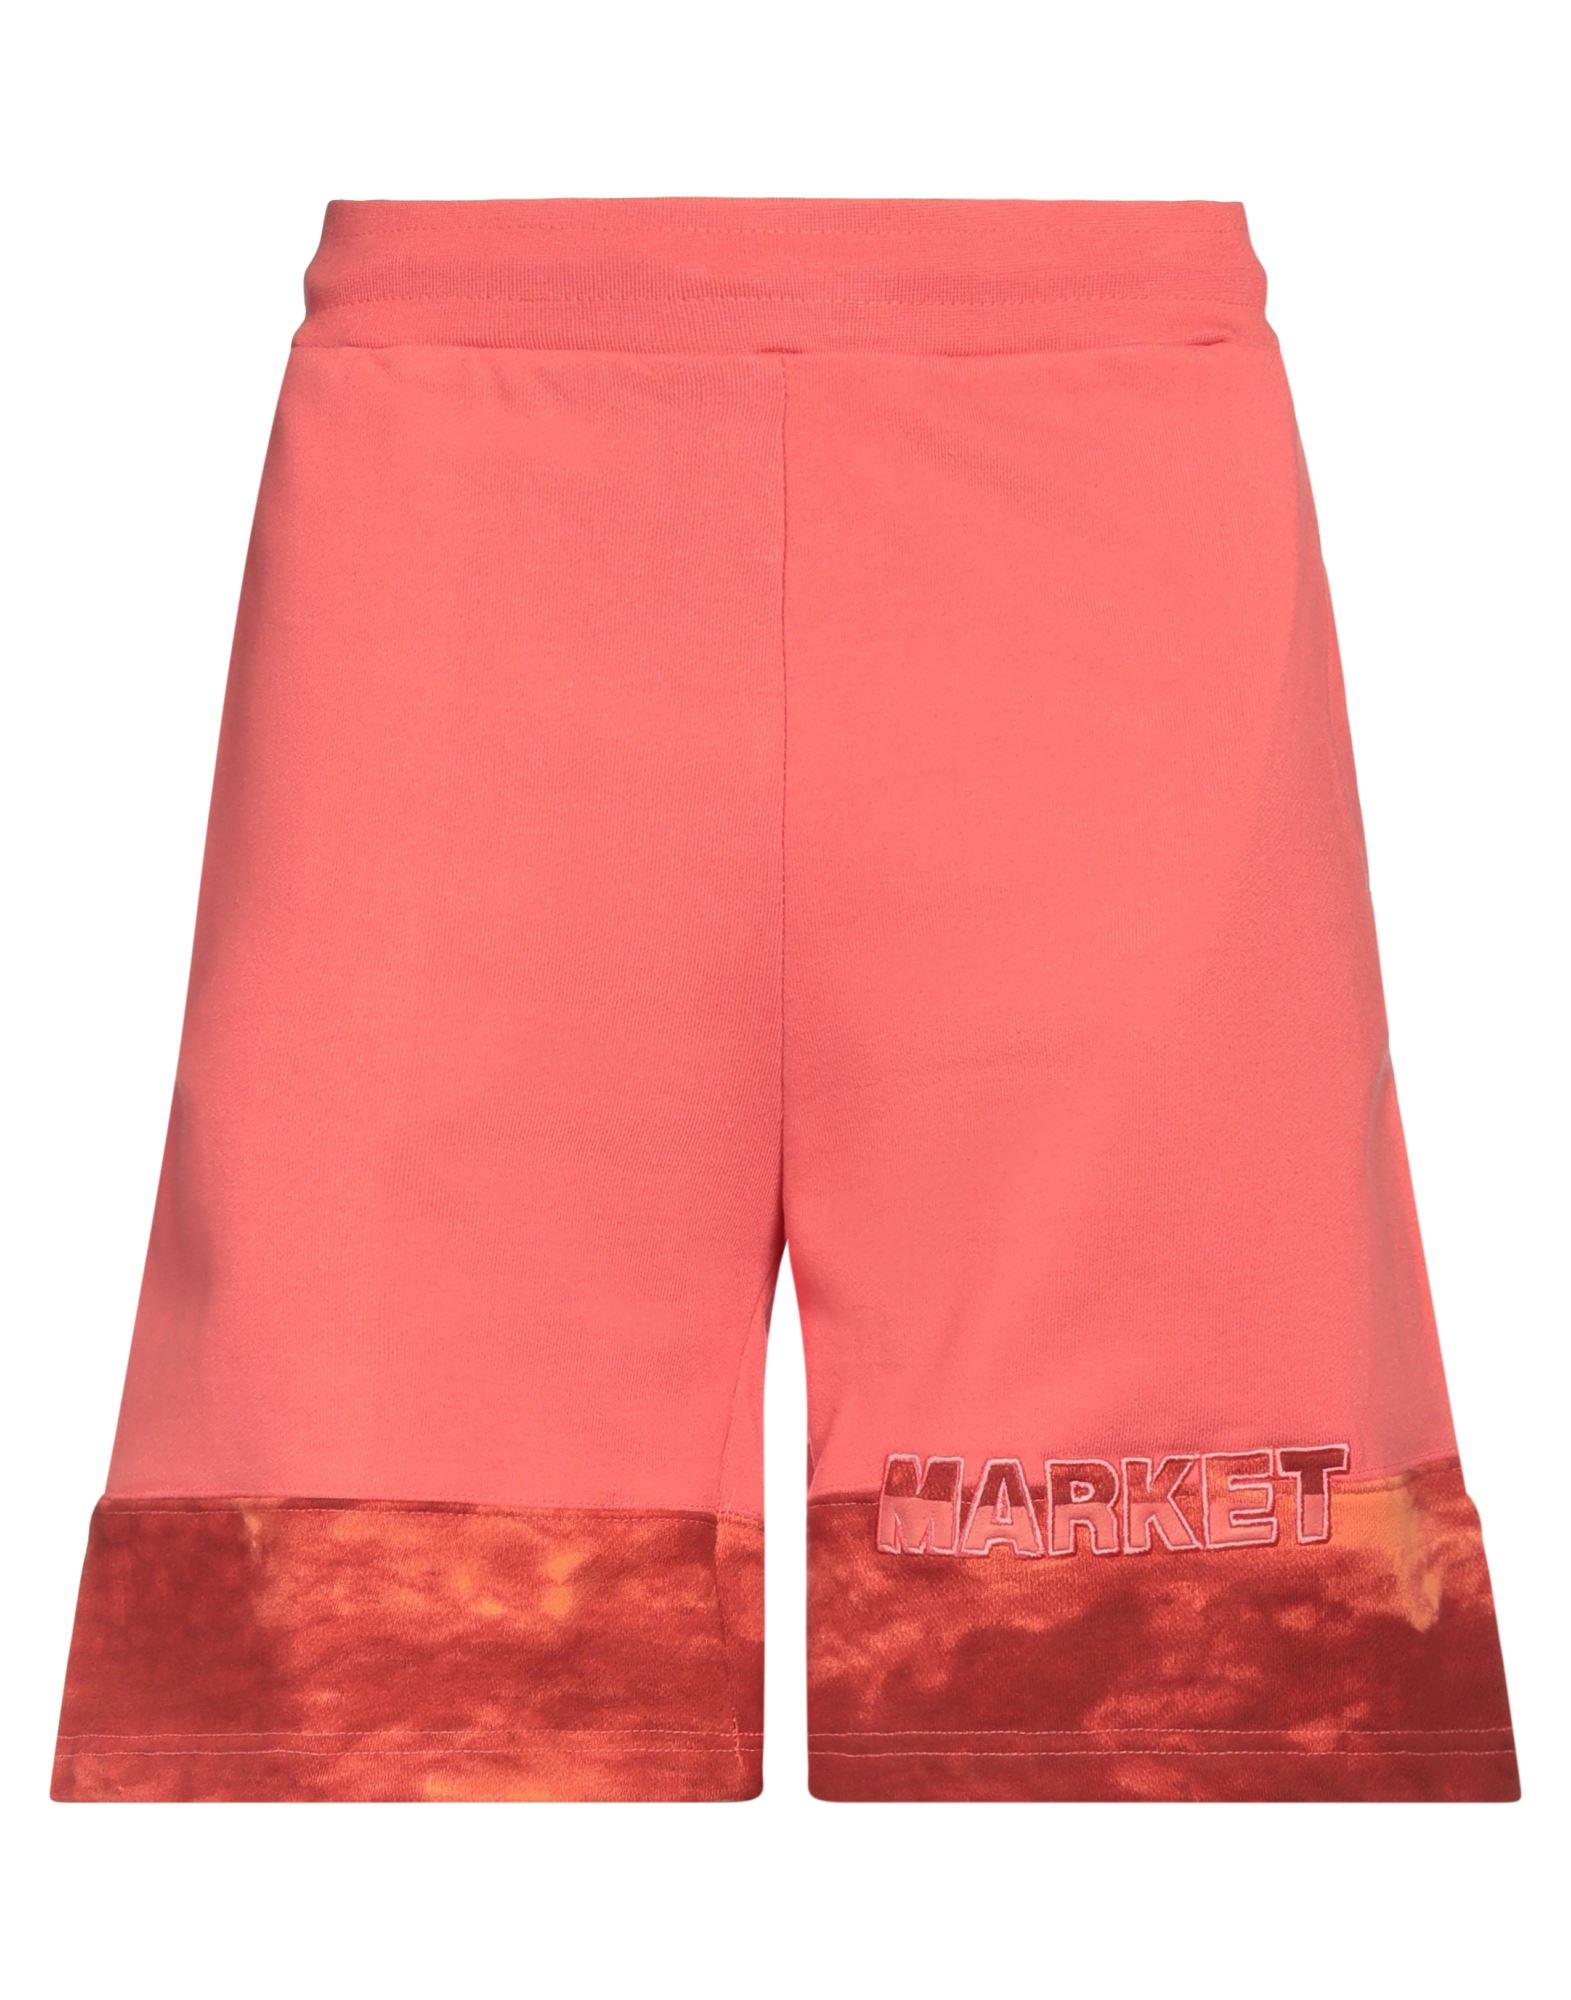 Market Man Shorts & Bermuda Shorts Rust Size Xl Cotton In Red